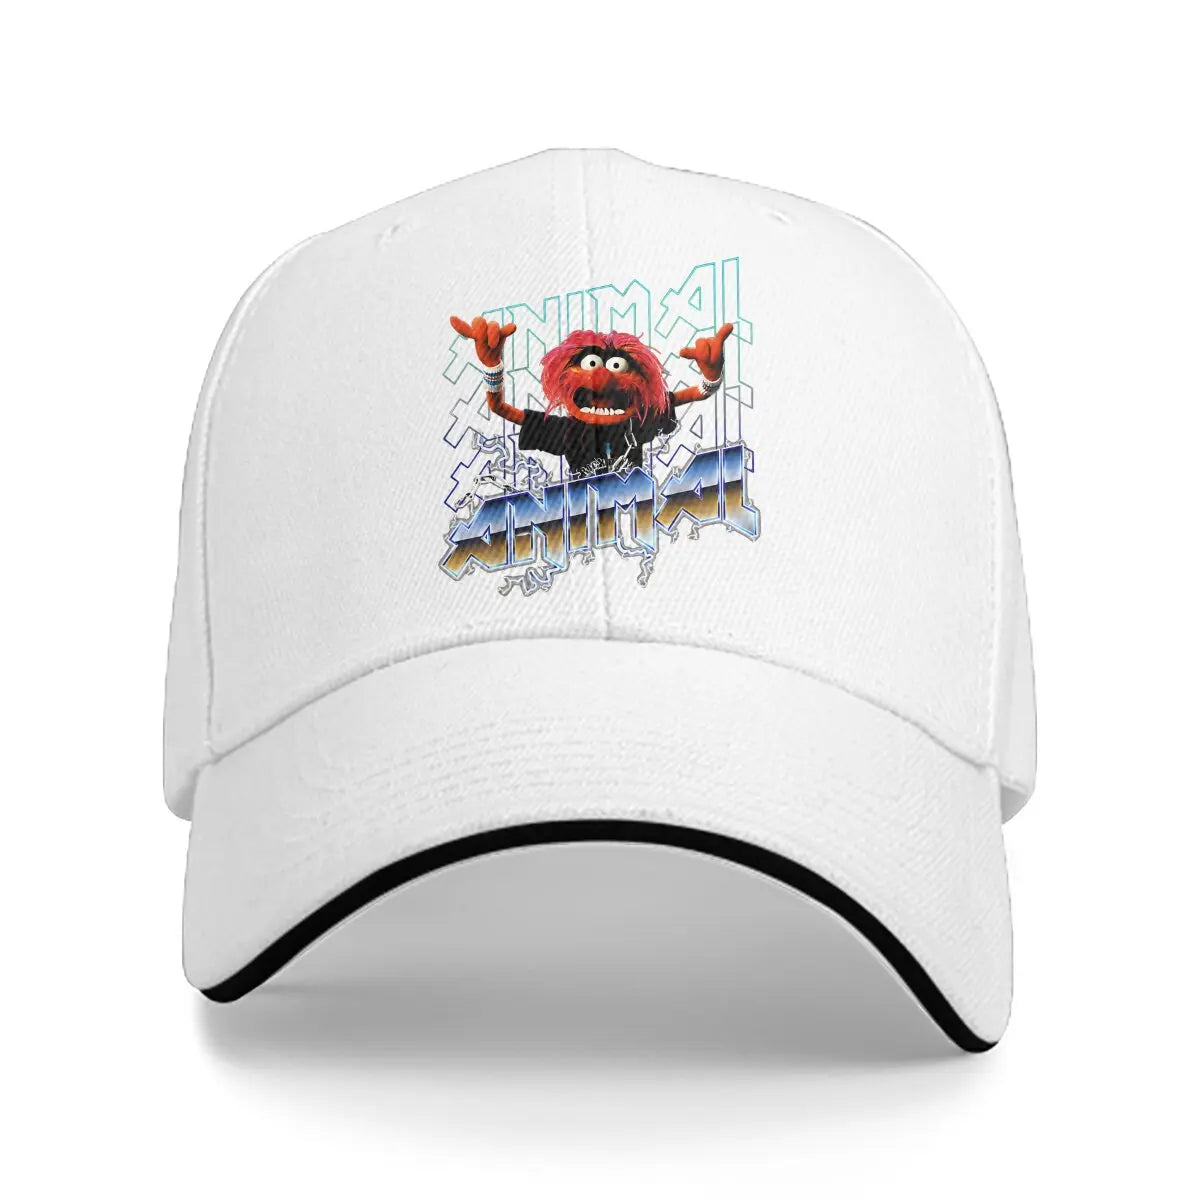 Animal Rock Men Baseball Caps Peaked Cap Sun Shade Windproof Hat The Muppet Show - Lizard Vigilante